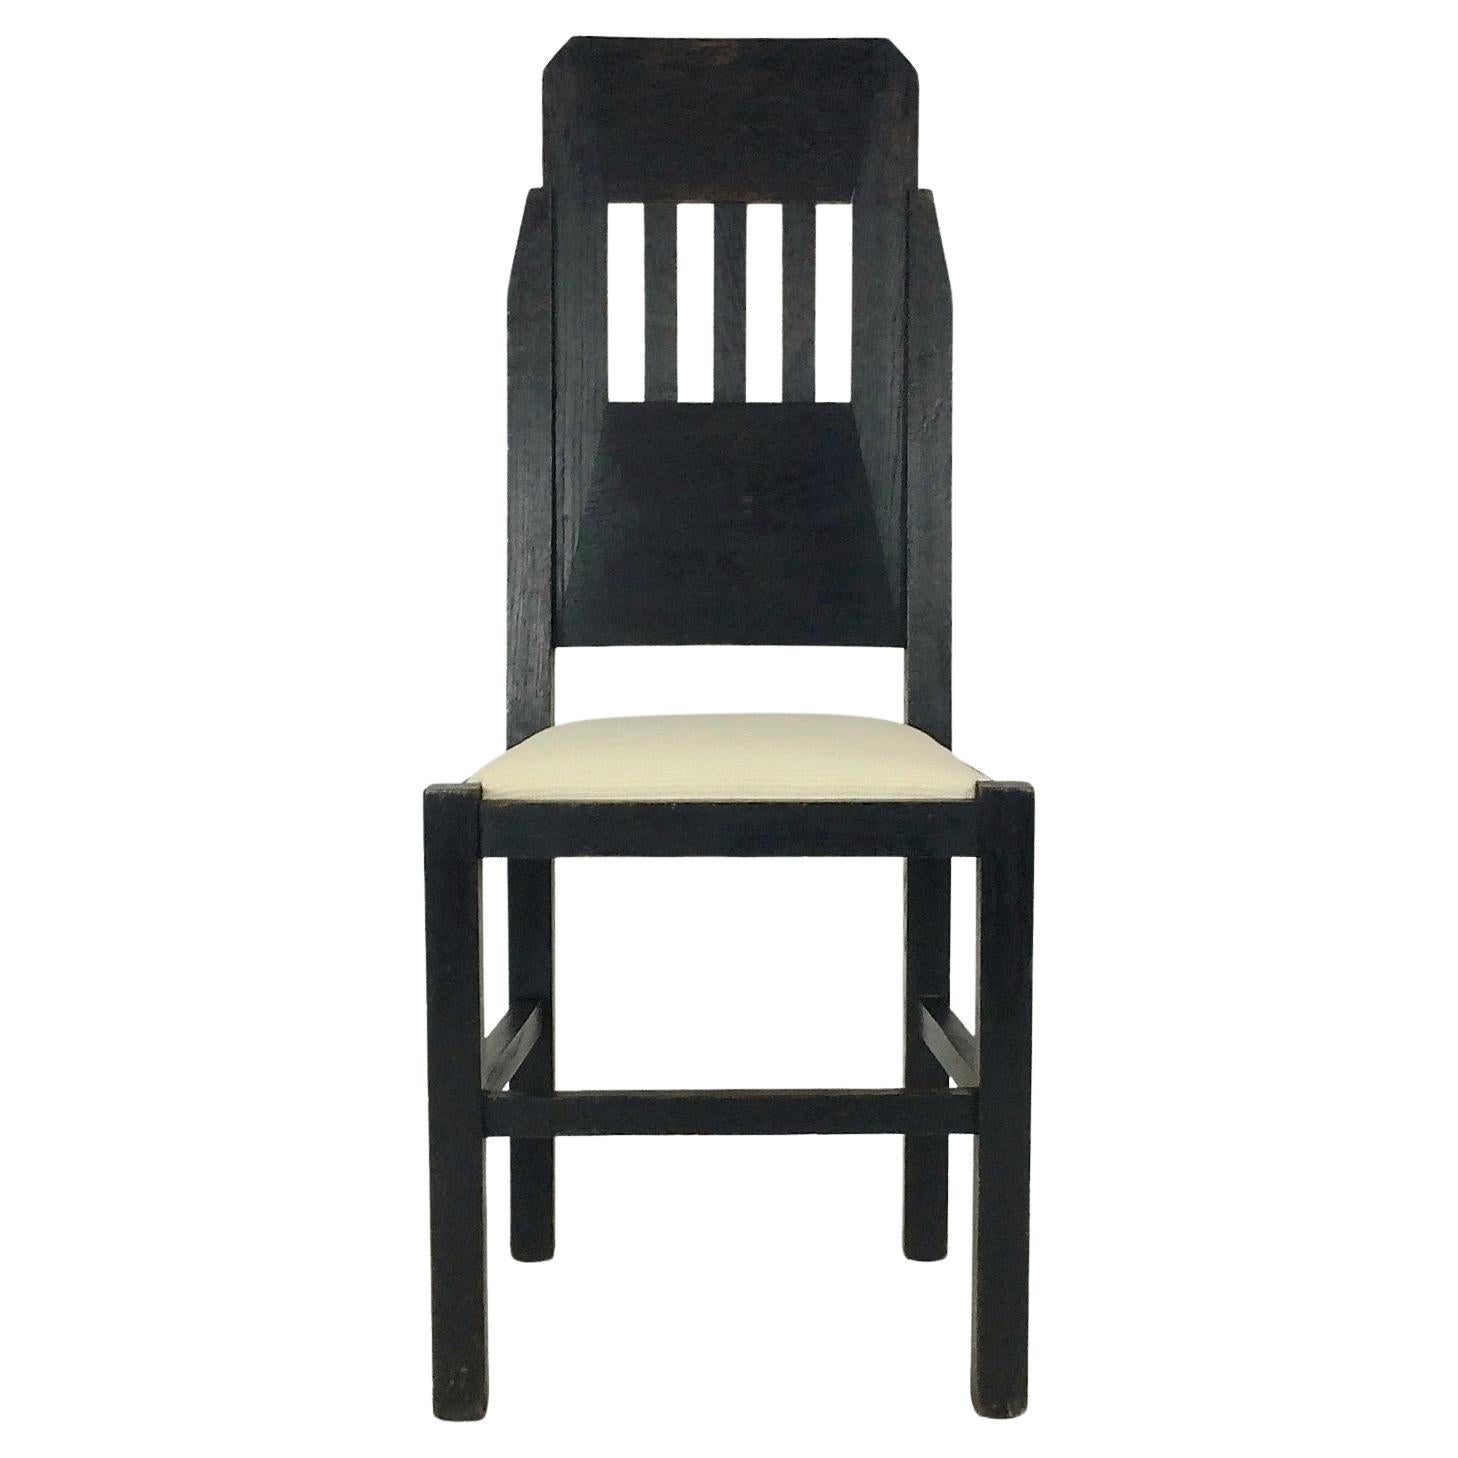 Marcel-Louis Baugniet Modernist Chair, circa 1925, Belgium